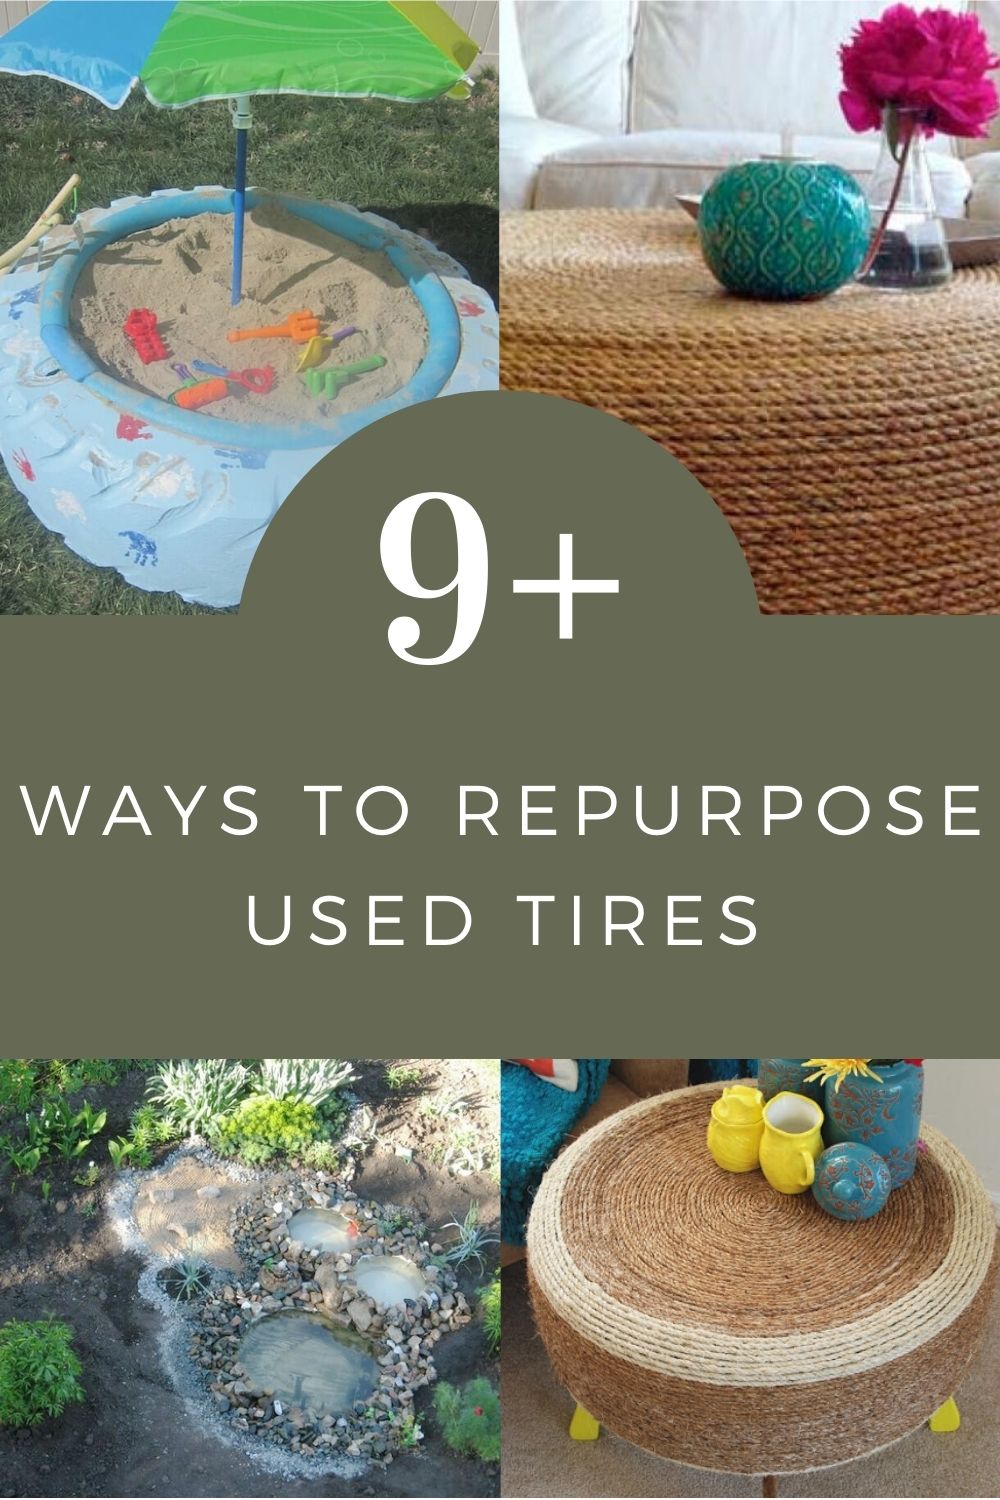 9+ Ways to Repurpose Used Tires